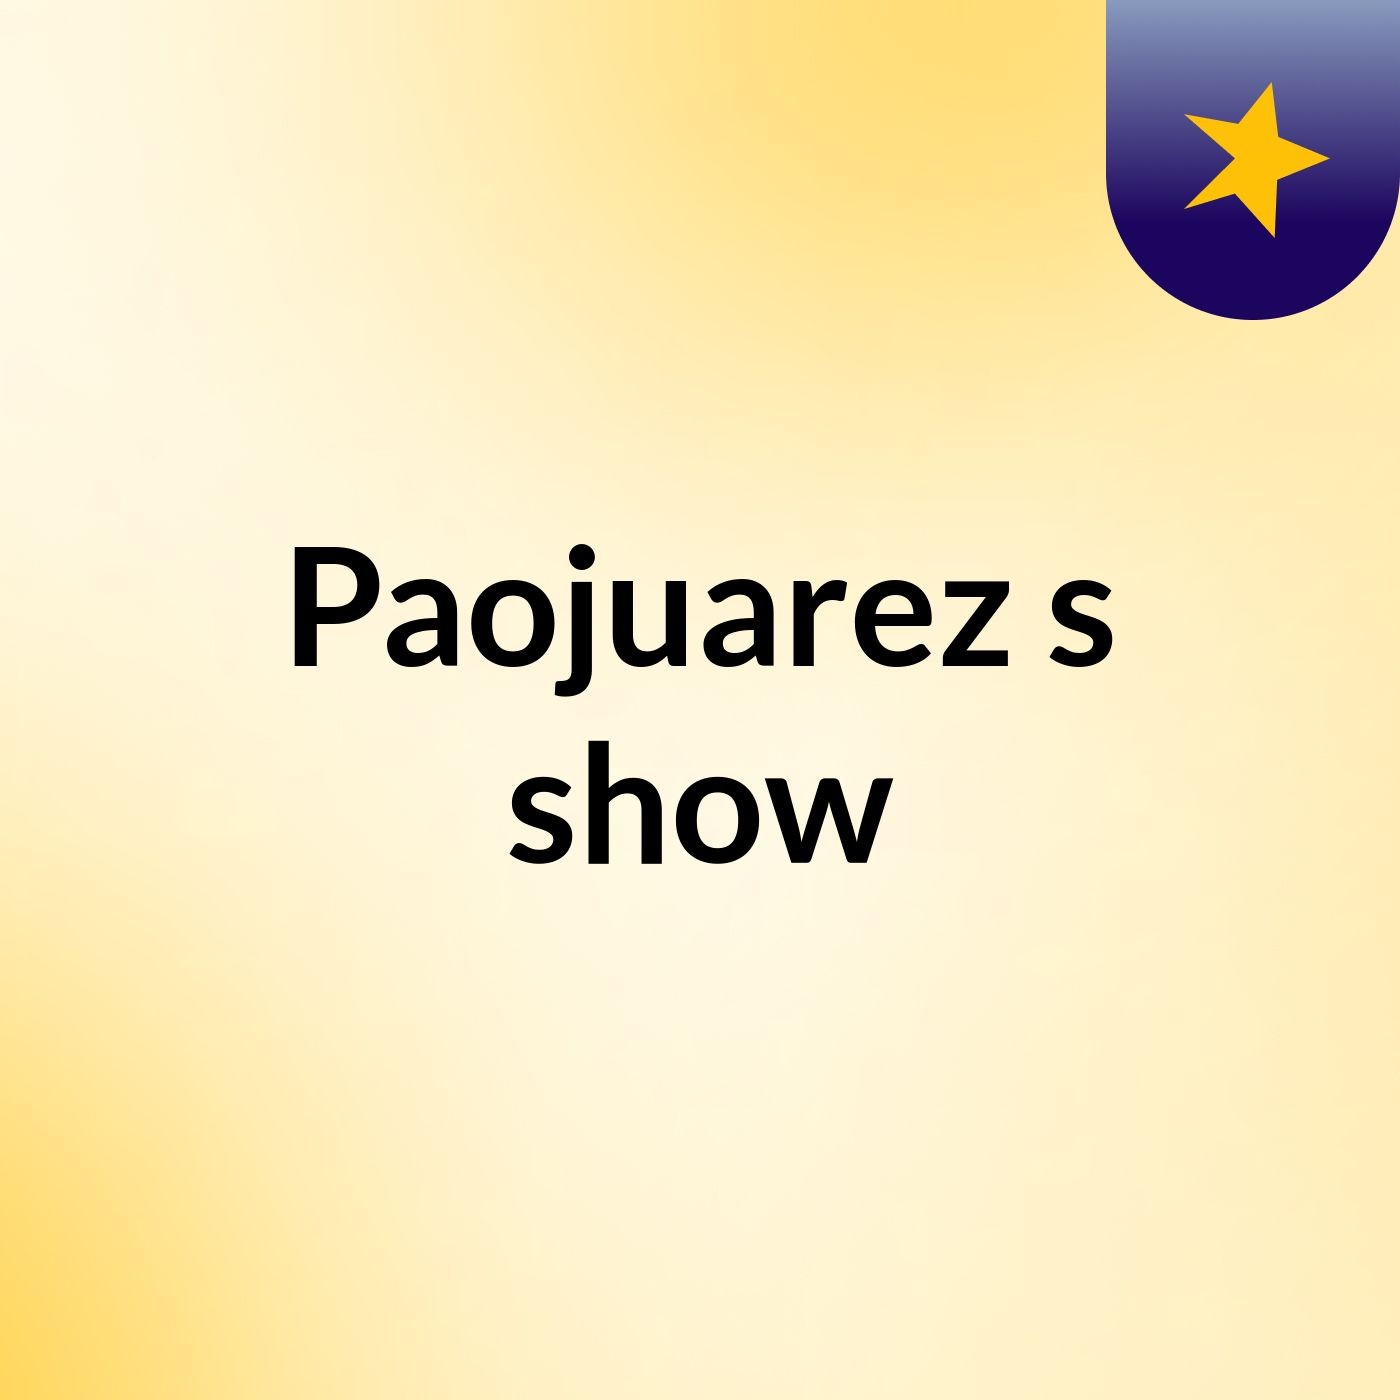 Paojuarez's show